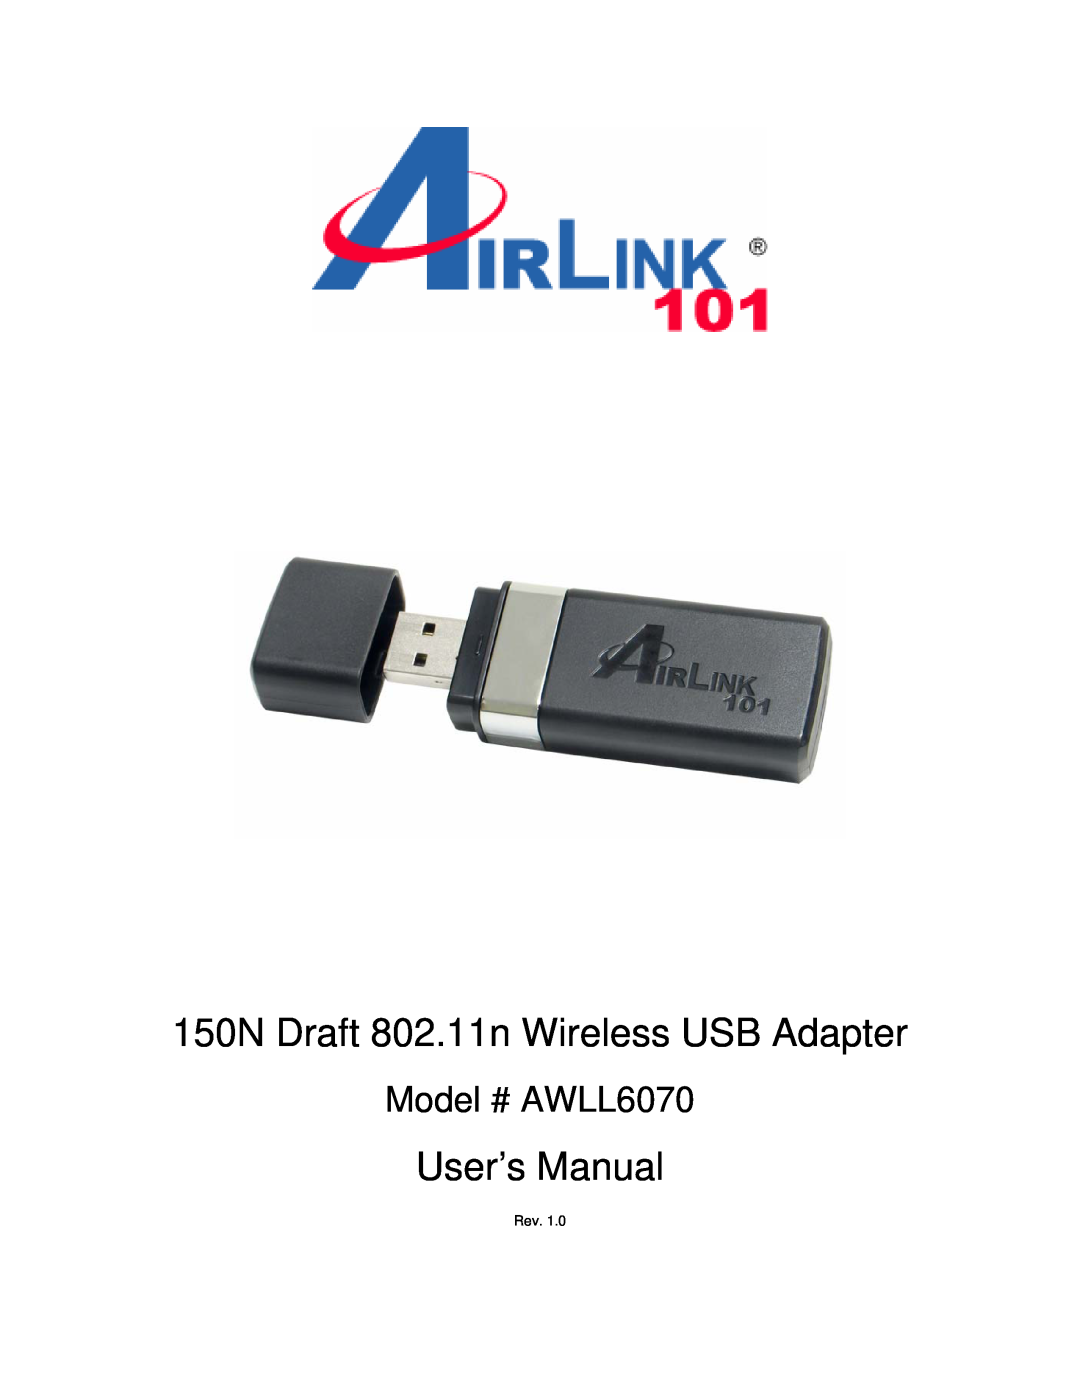 Airlink101 user manual 150N Draft 802.11n Wireless USB Adapter, User’s Manual, Model # AWLL6070 